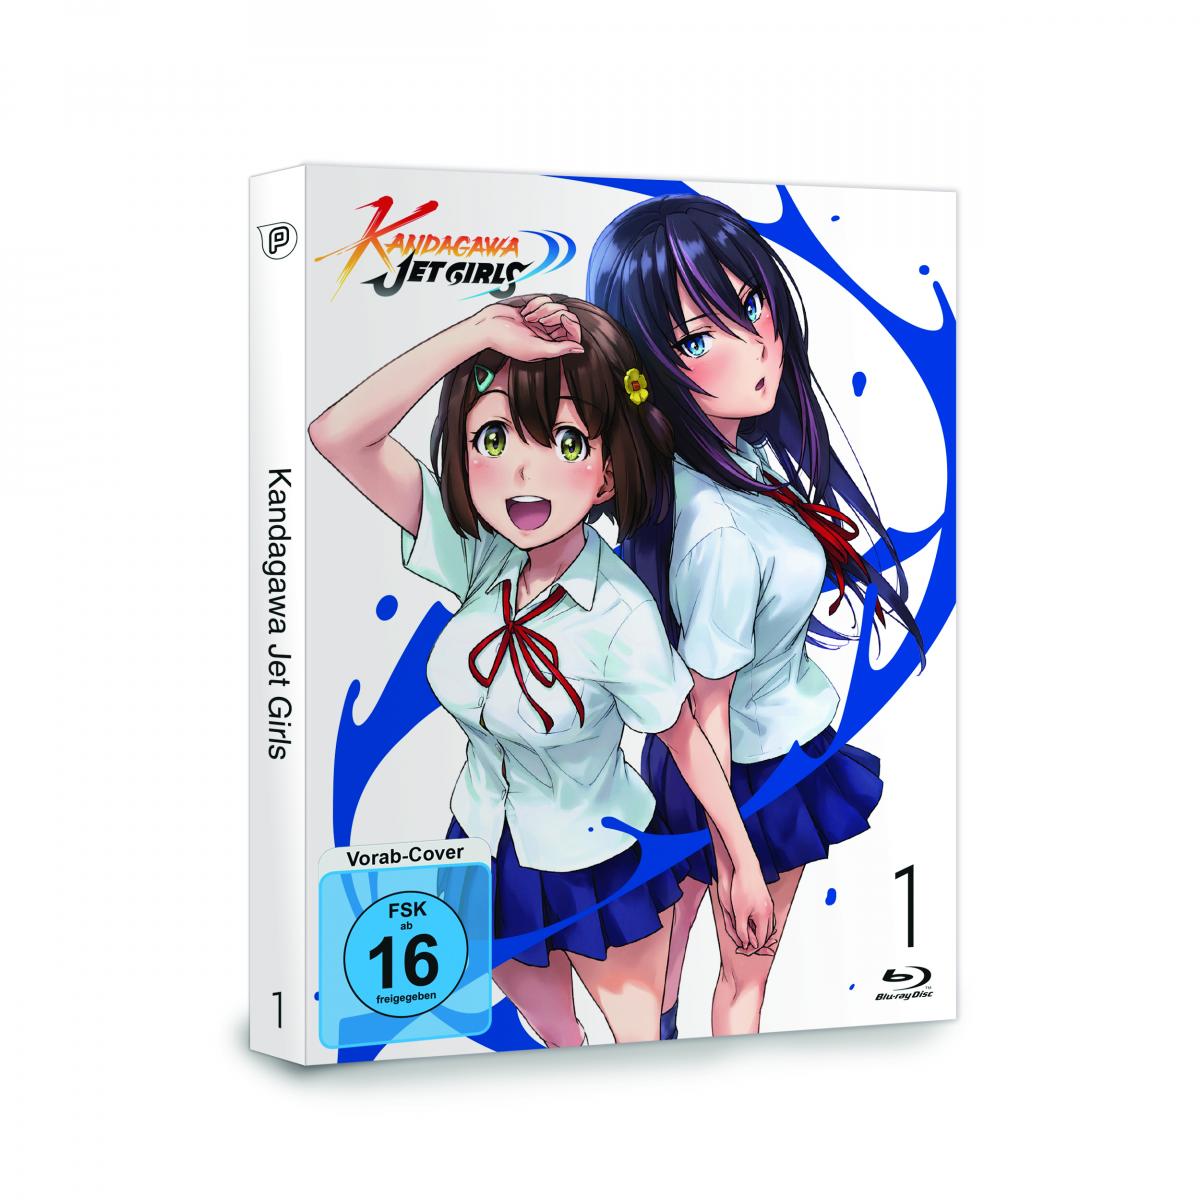 Kandagawa Jet Girls - Volume 1 [Blu-ray] Image 2